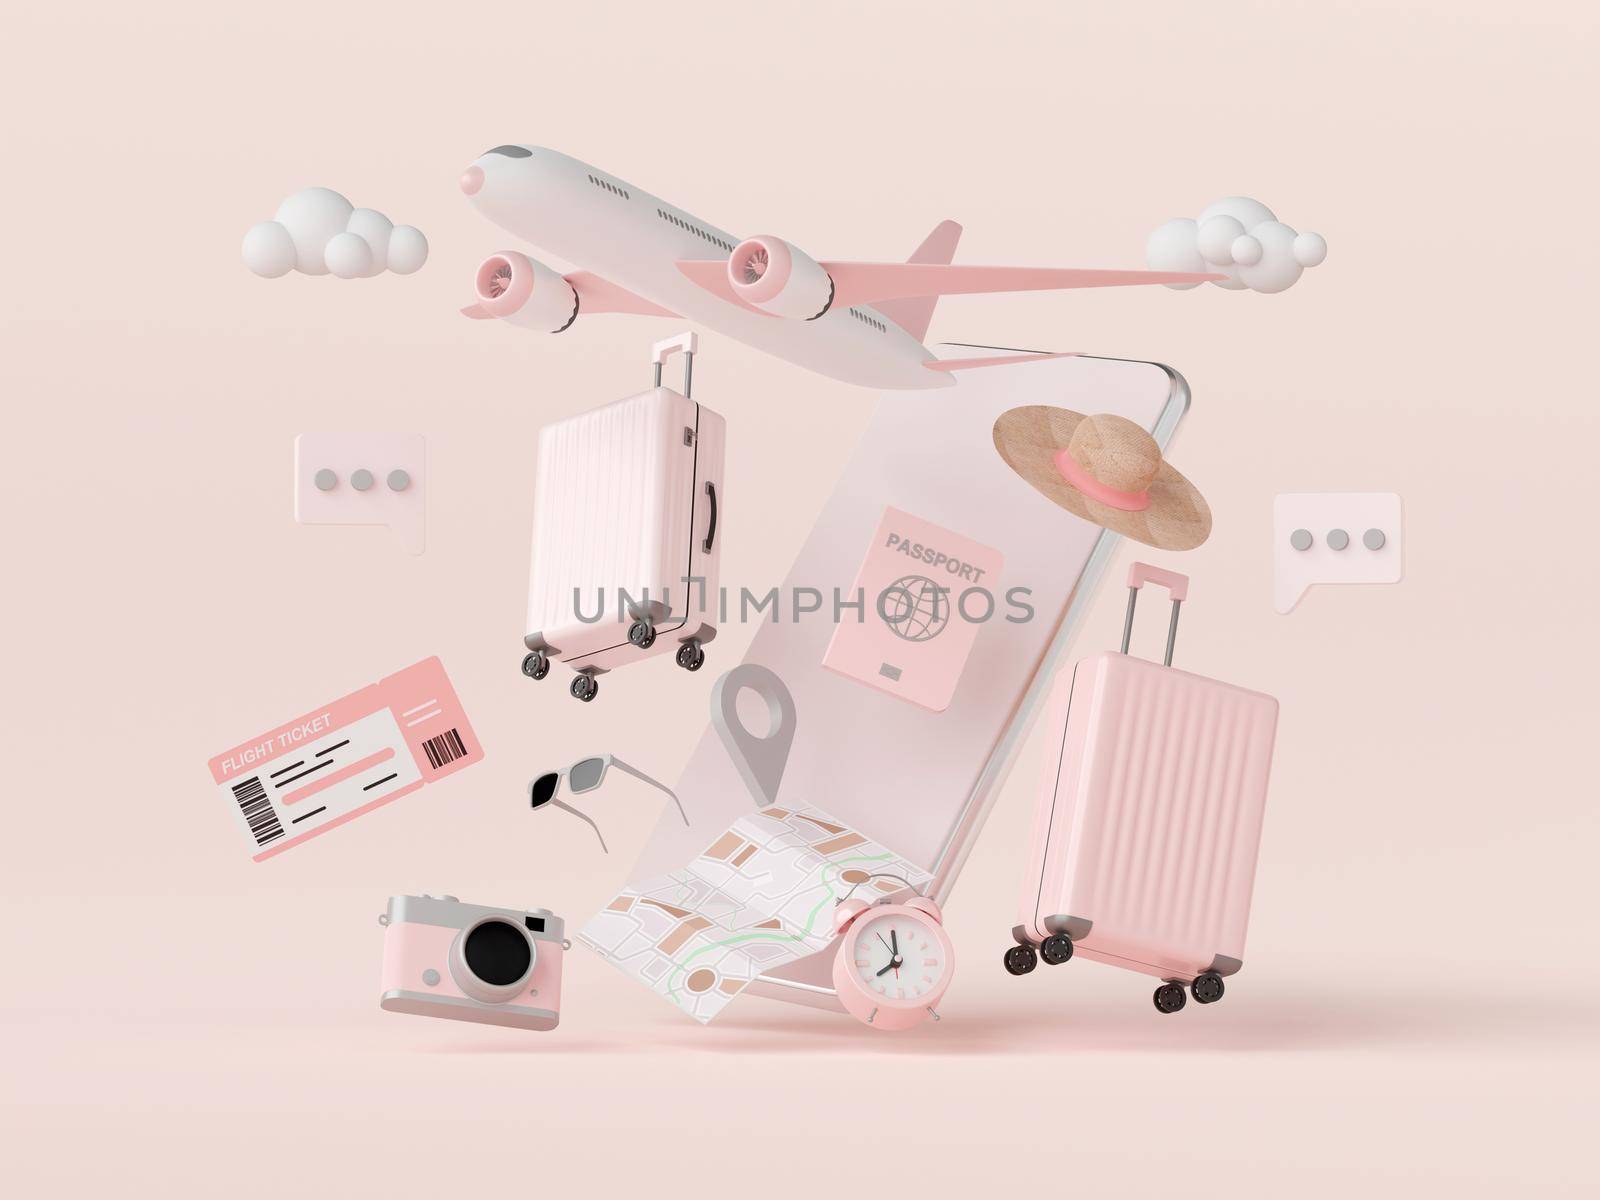 Flight booking, buy ticket or checking application on smartphone, 3d illustration by nutzchotwarut